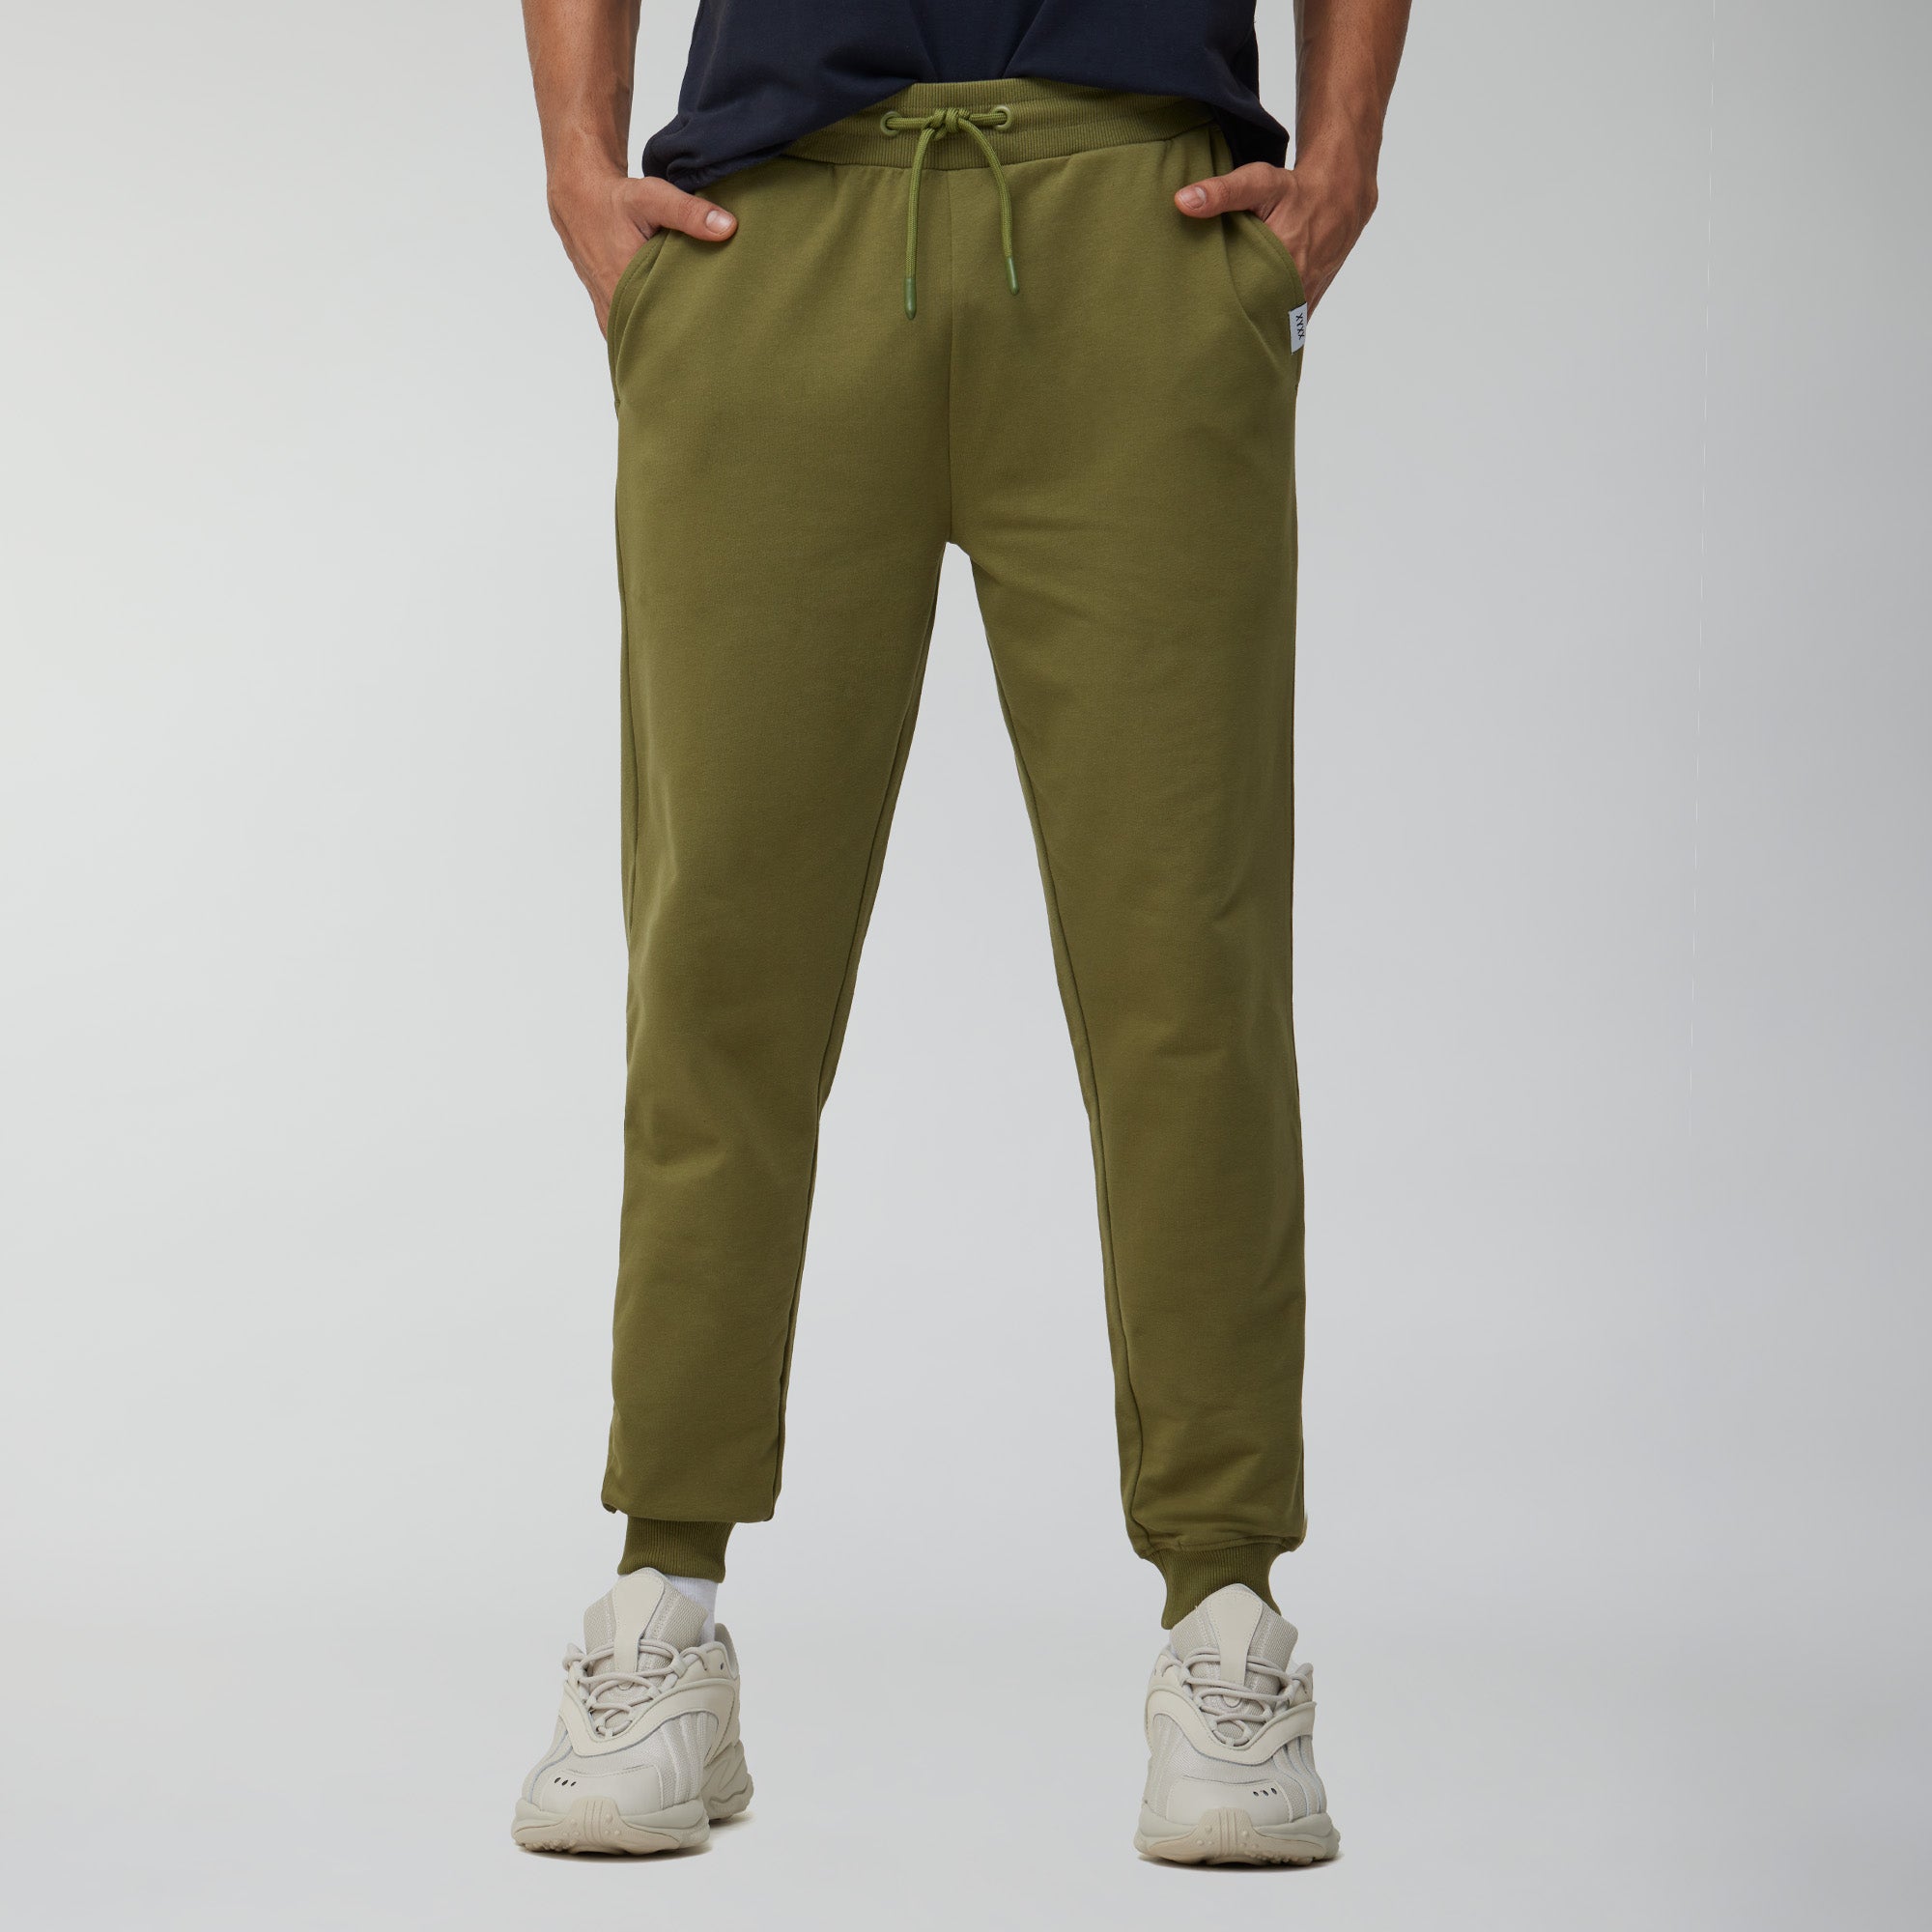 Olive green jogger pants